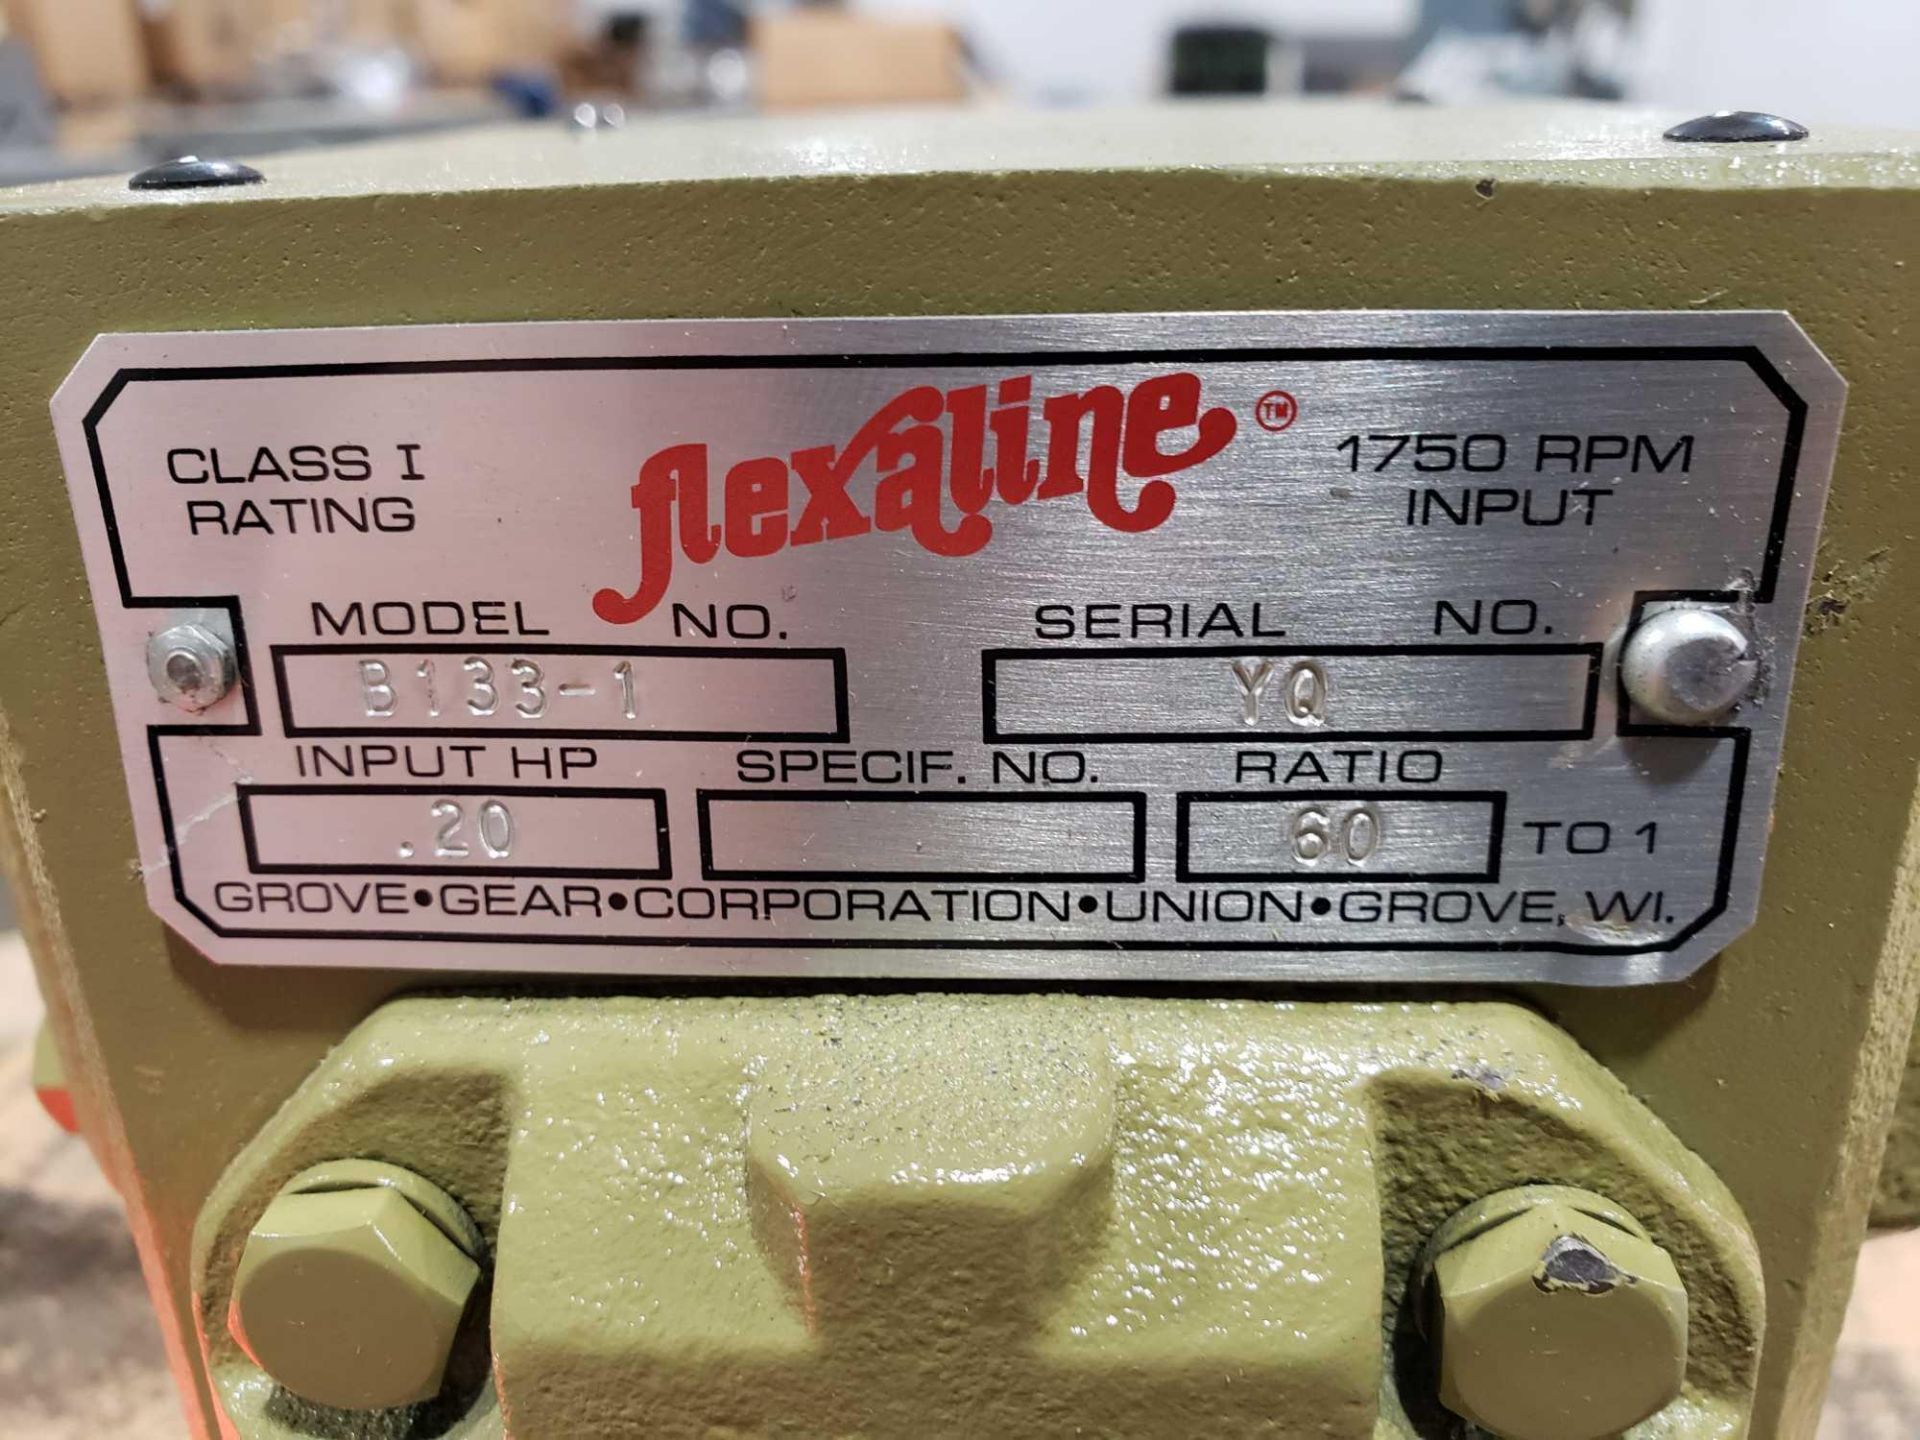 Grove Gear Flexaline Model B133-1 gear box reducer, ratio 60:1. New in box. - Image 2 of 2